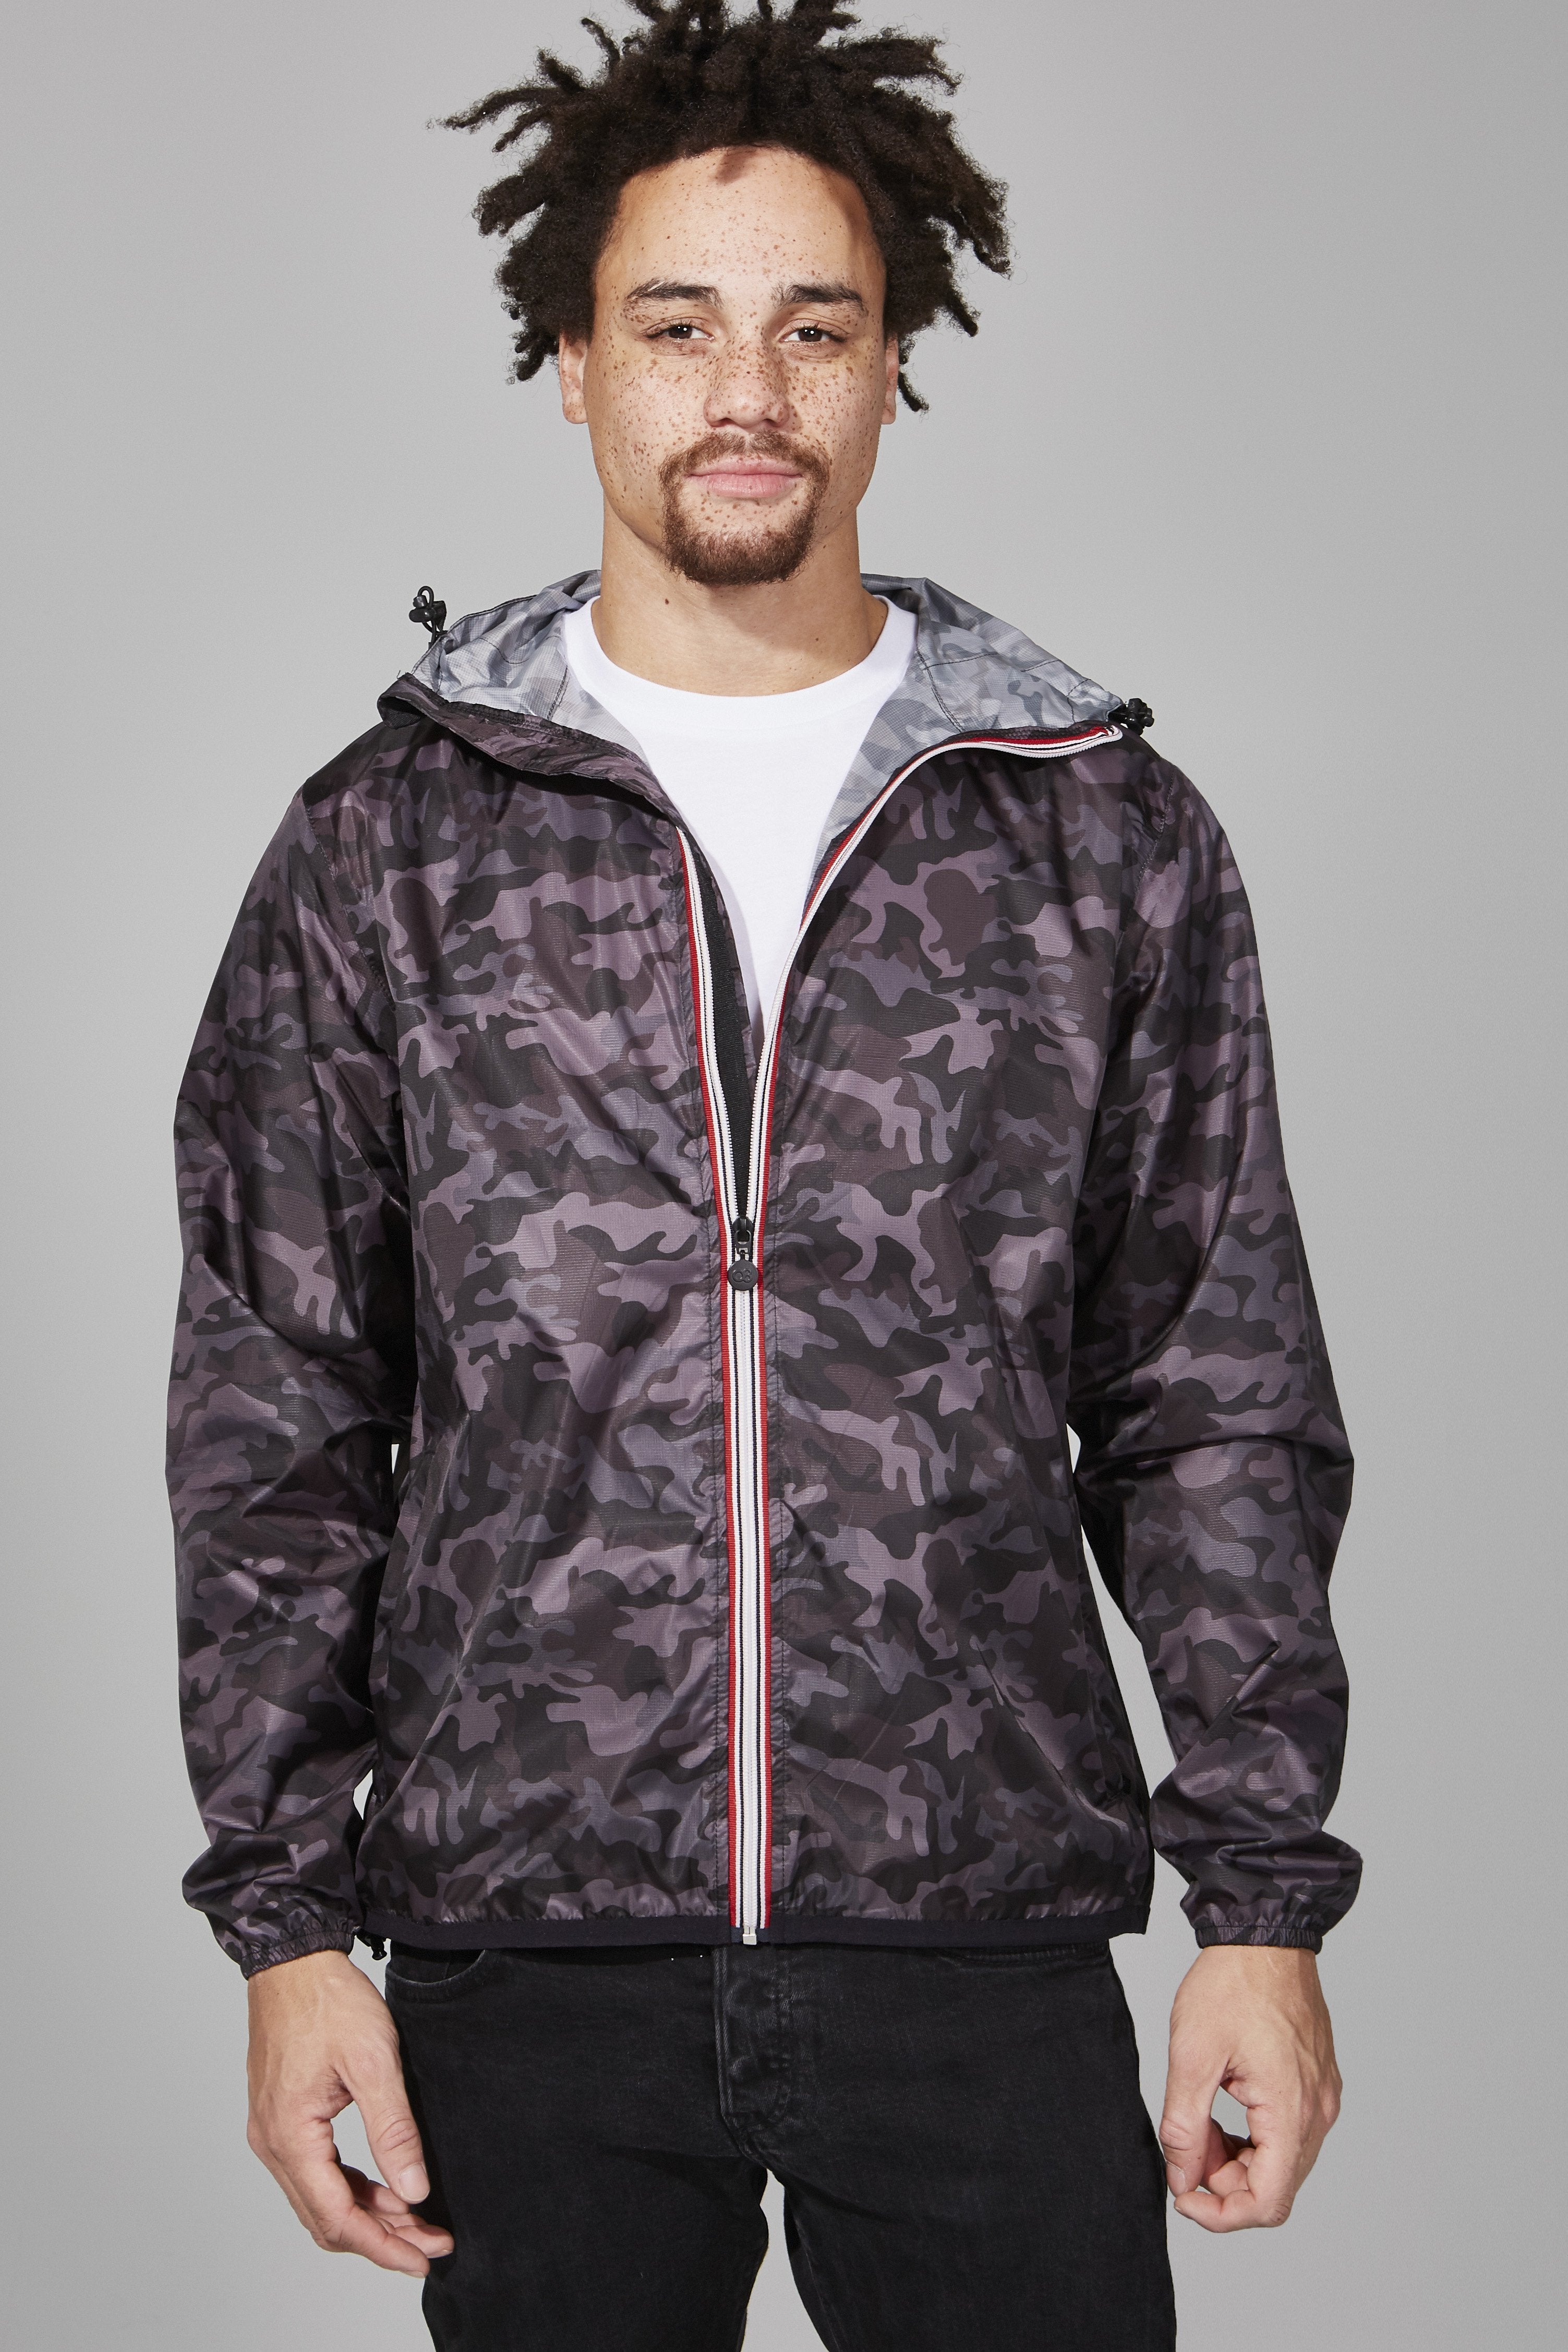 Max Print - Black Camo Full Zip Packable Rain Jacket - O8lifestyle.